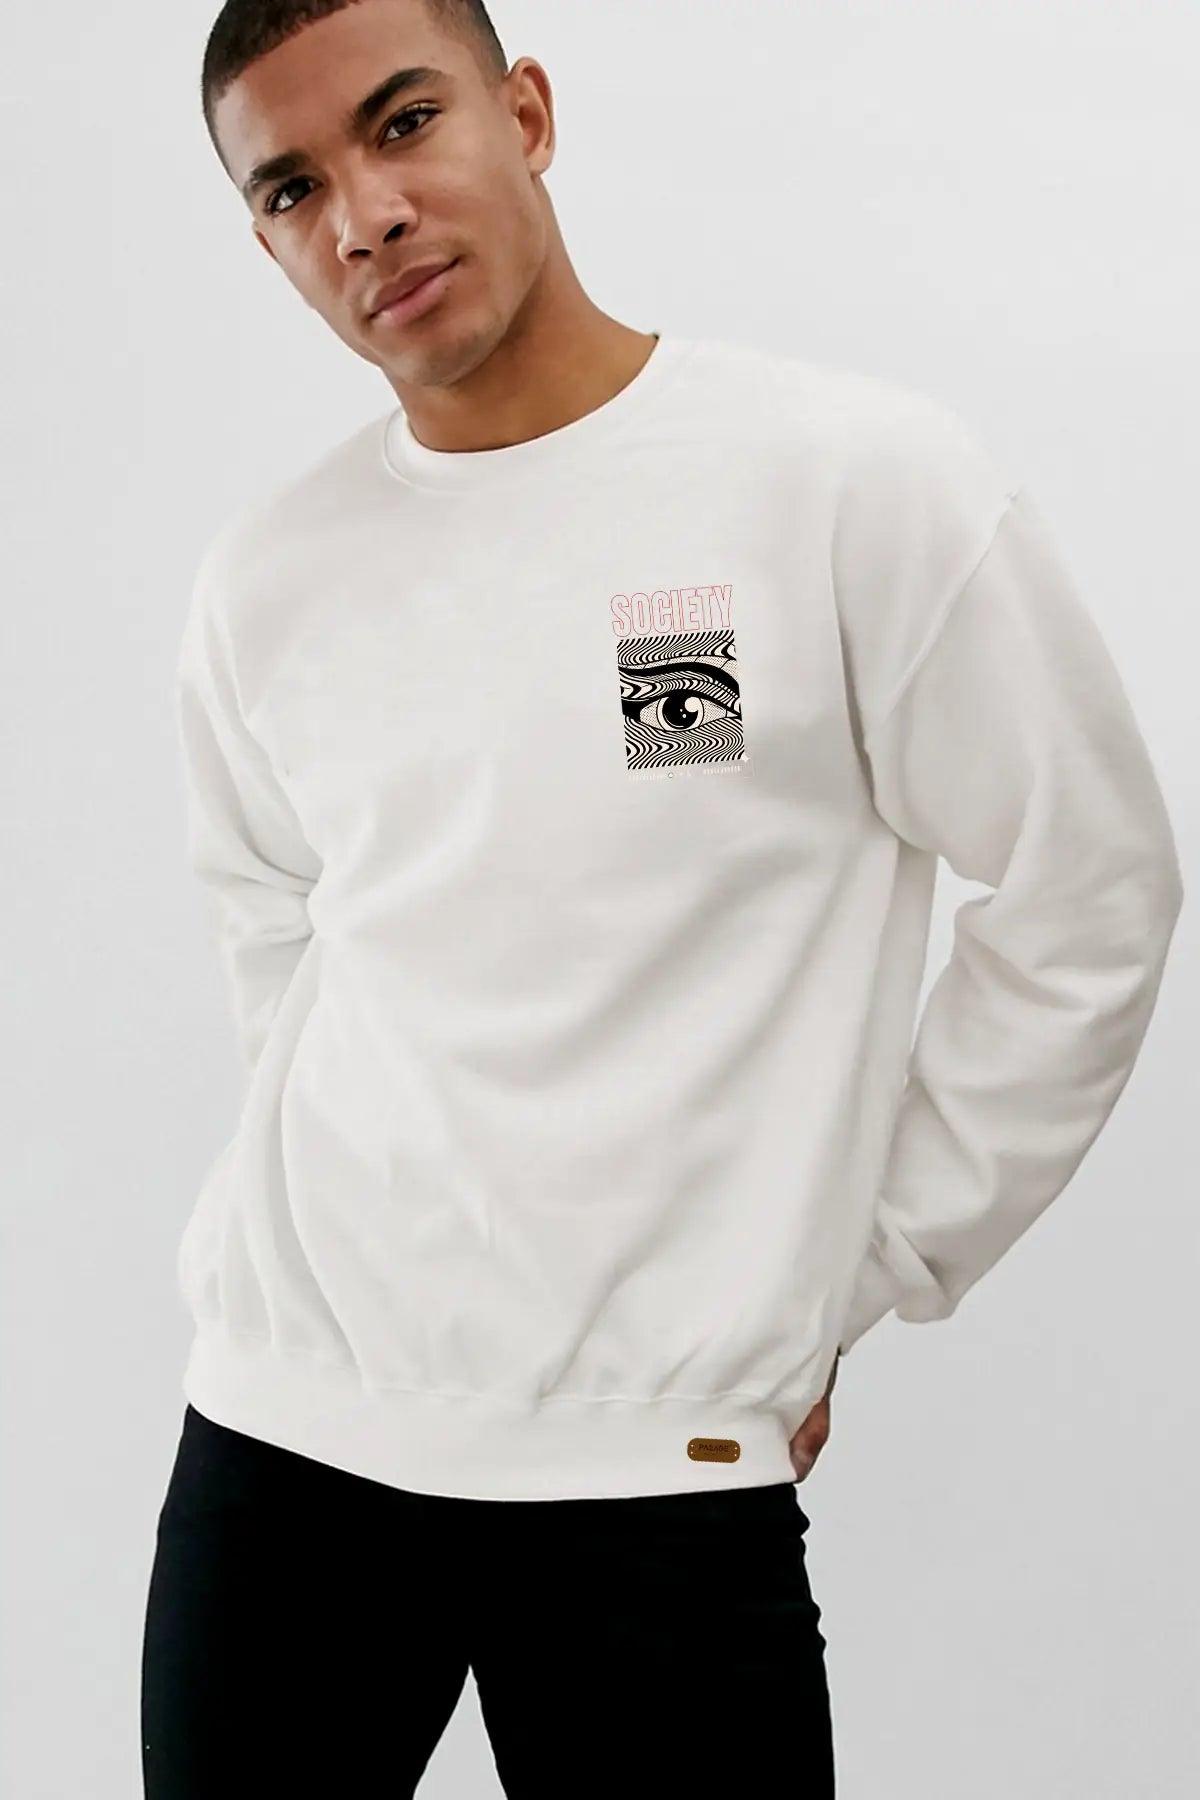 Society Oversize Erkek Sweatshirt - PΛSΛGE